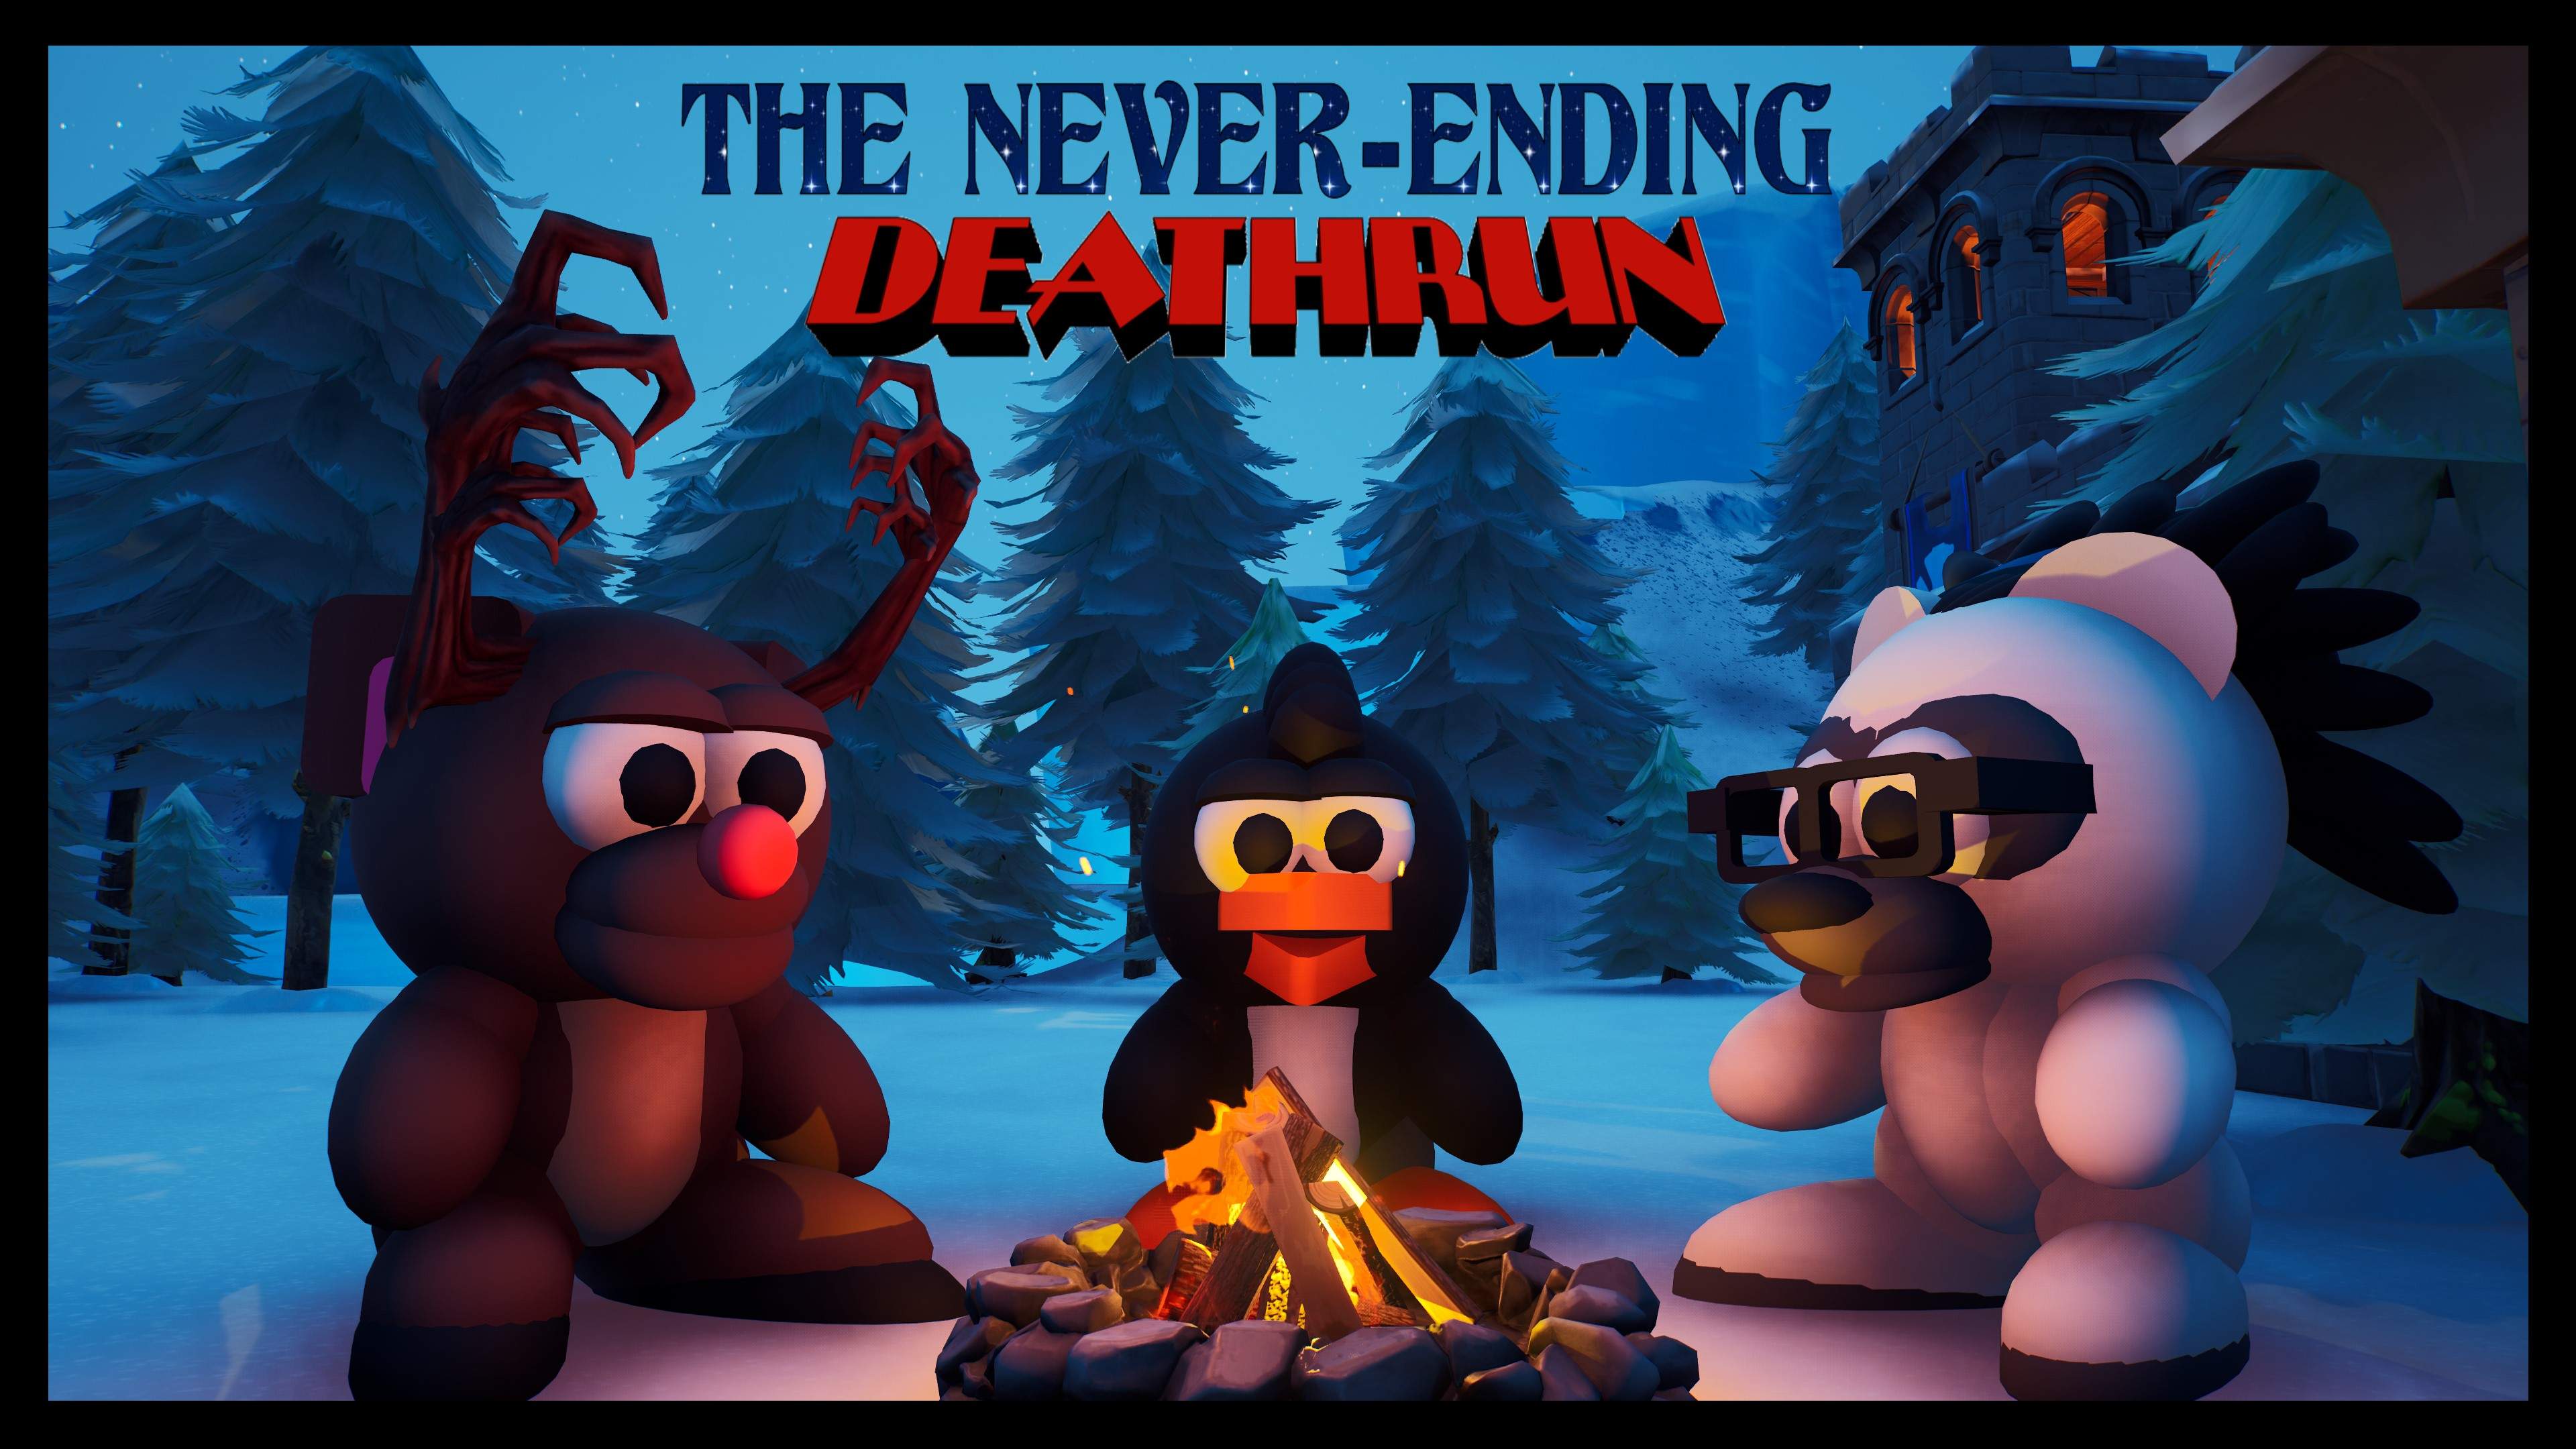 The Never-ending Deathrun image 2